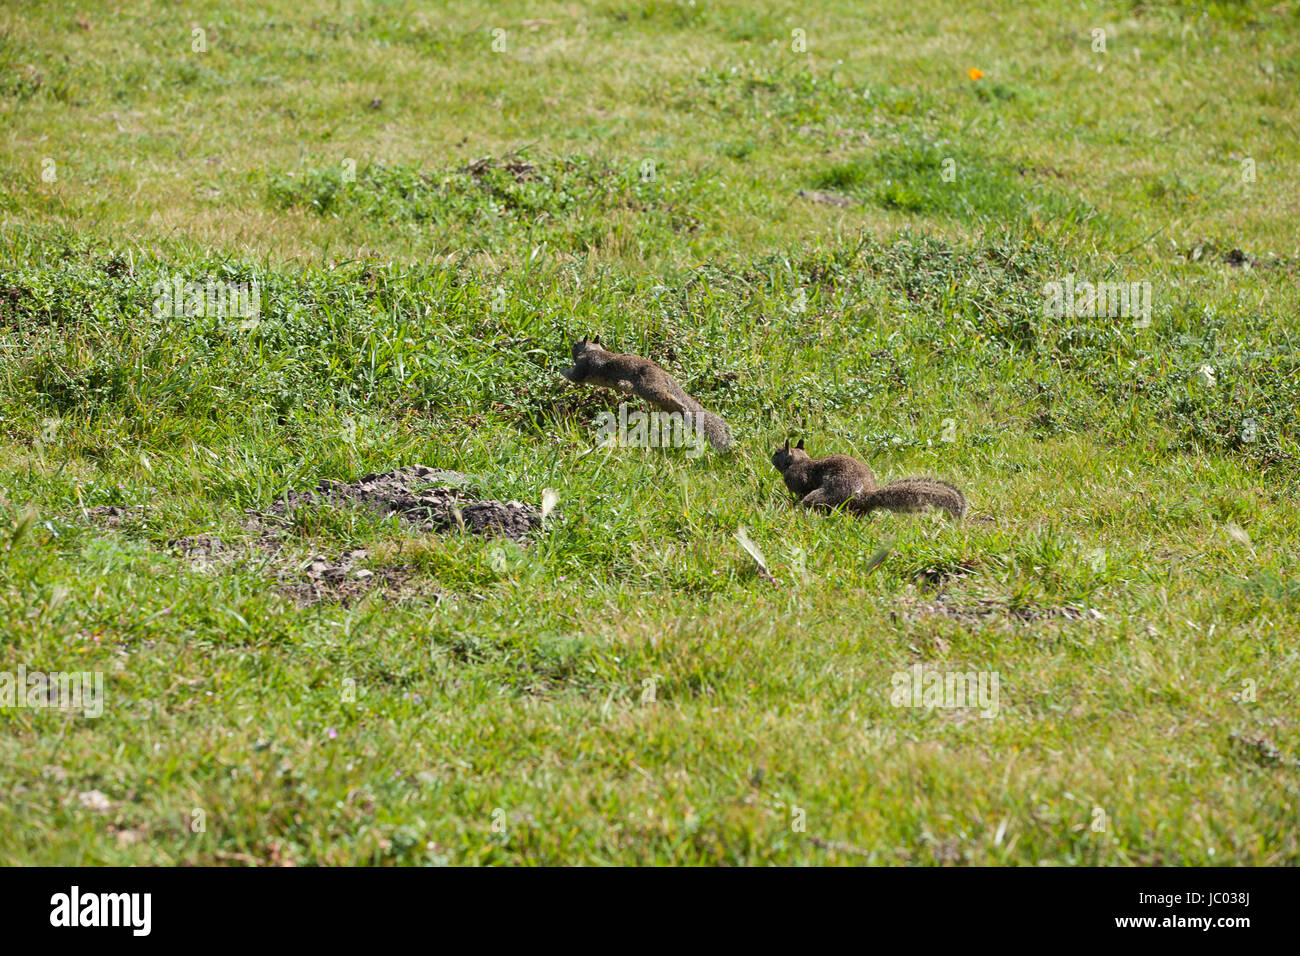 One California ground squirrel chasing another (Otospermophilus beecheyi) - California USA Stock Photo